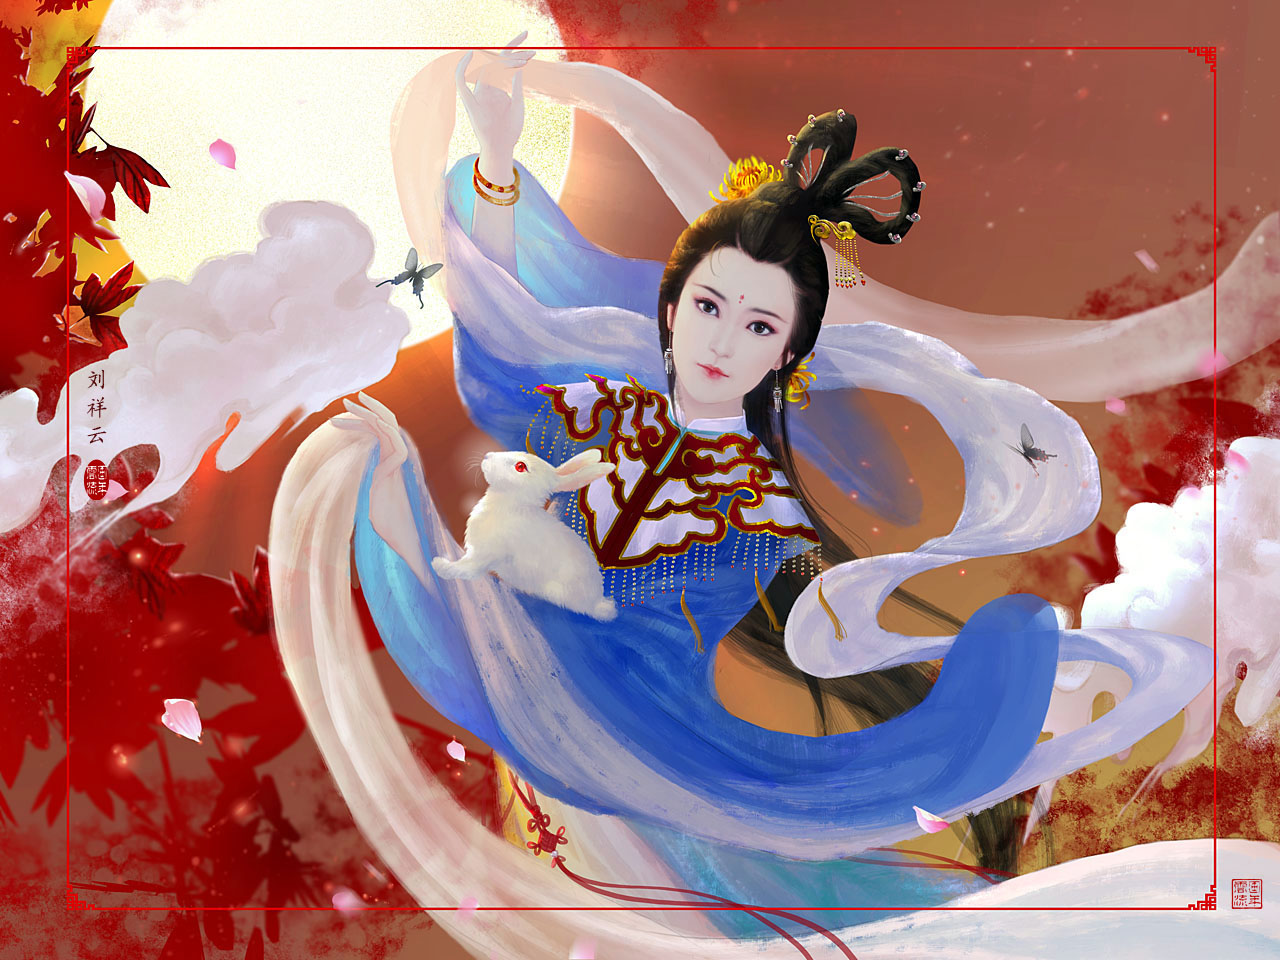 Digital Art Original Characters Fantasy Girl HiLiuyun 1280x960